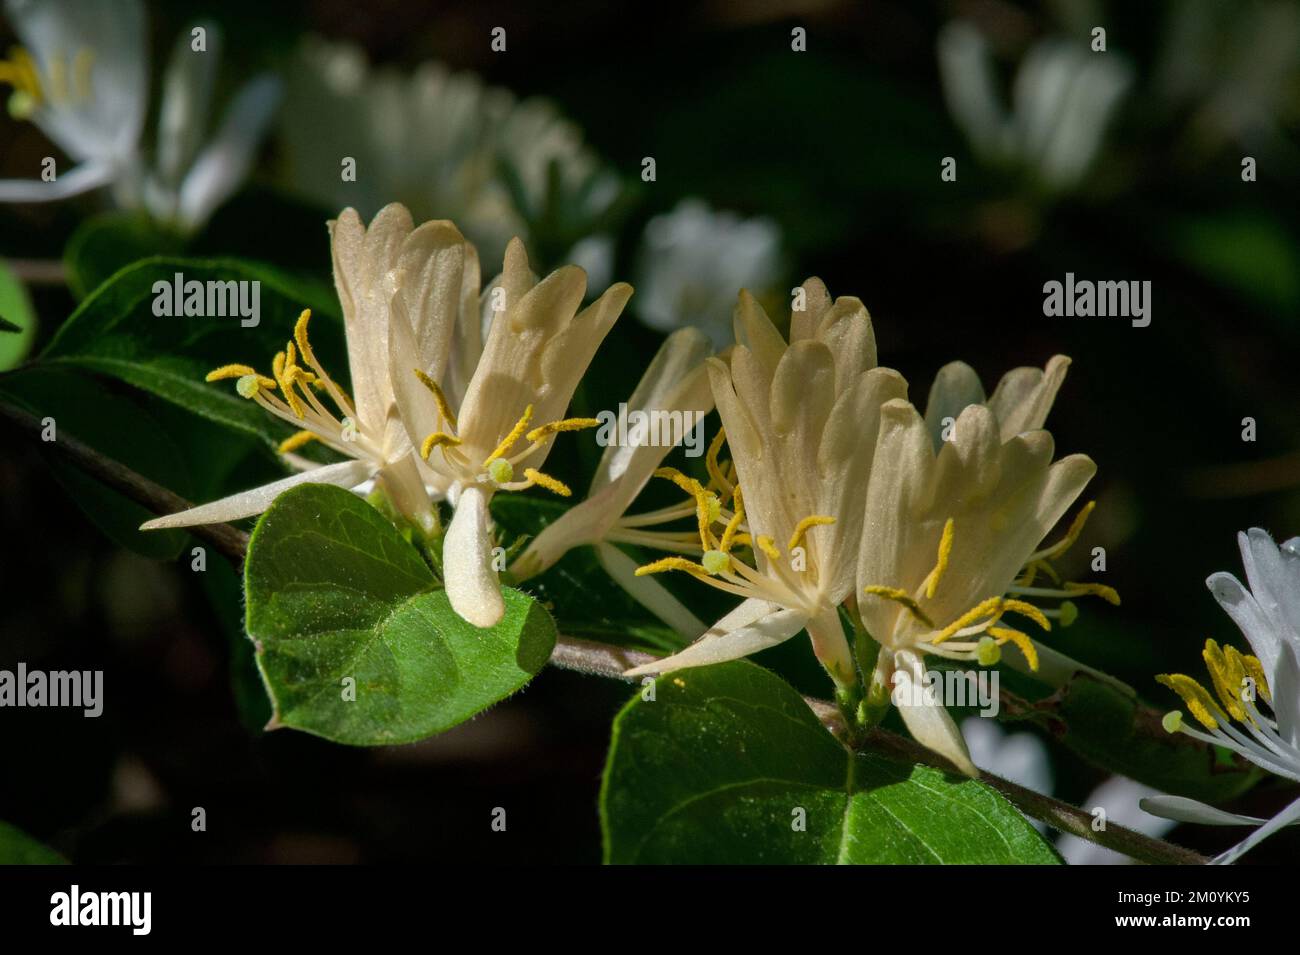 A Honeysuckle shrub, probably Amur Honeysuckle (Lonicera maacki) in bloom Stock Photo